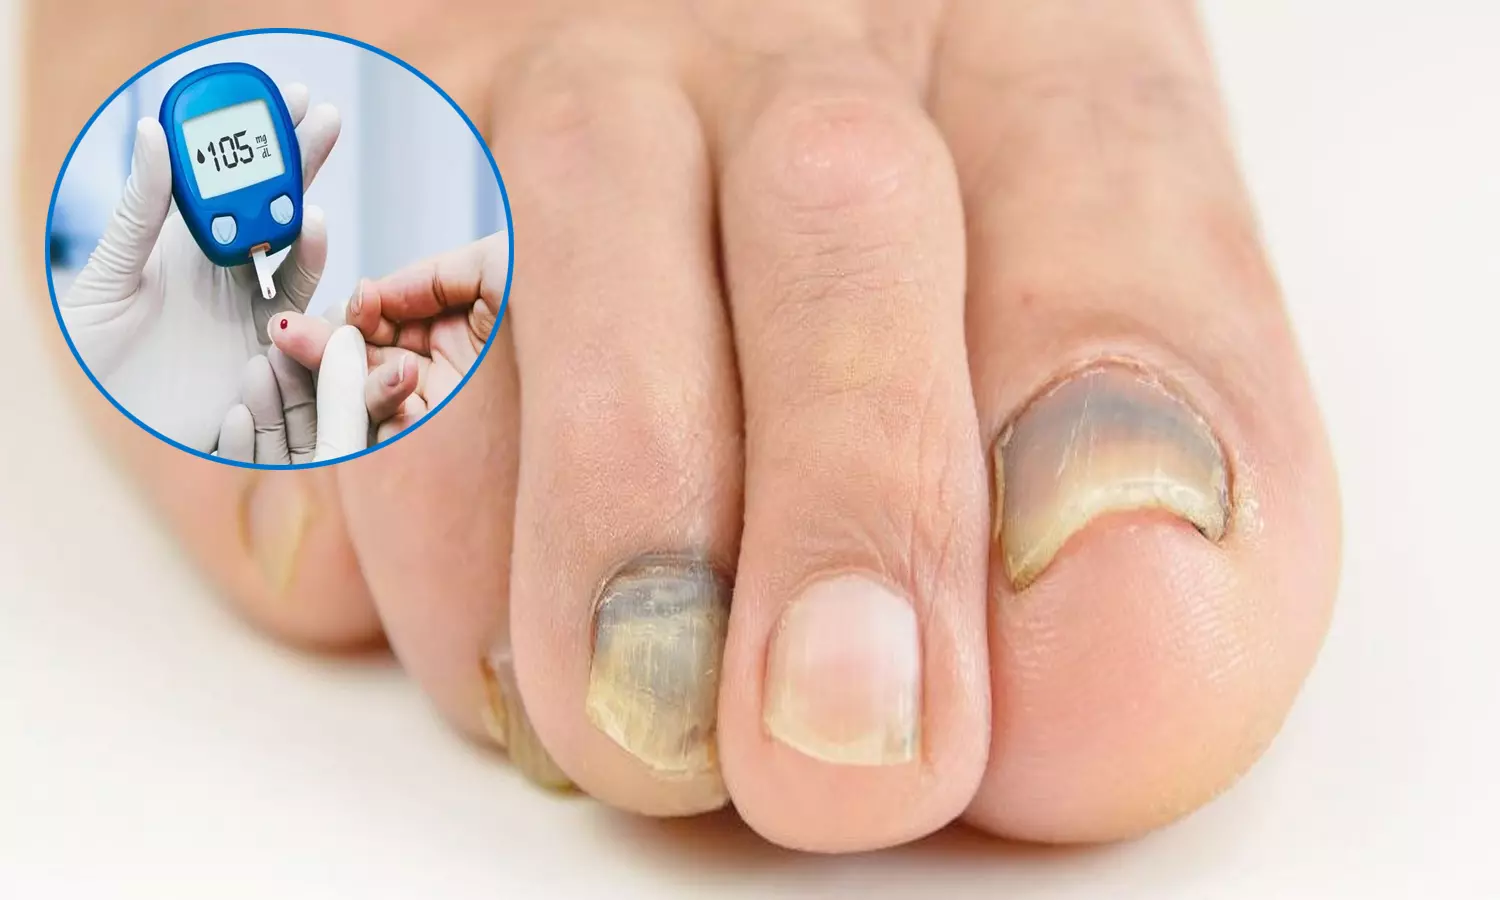 Black Fingernail - Symptoms, Causes & Treatment